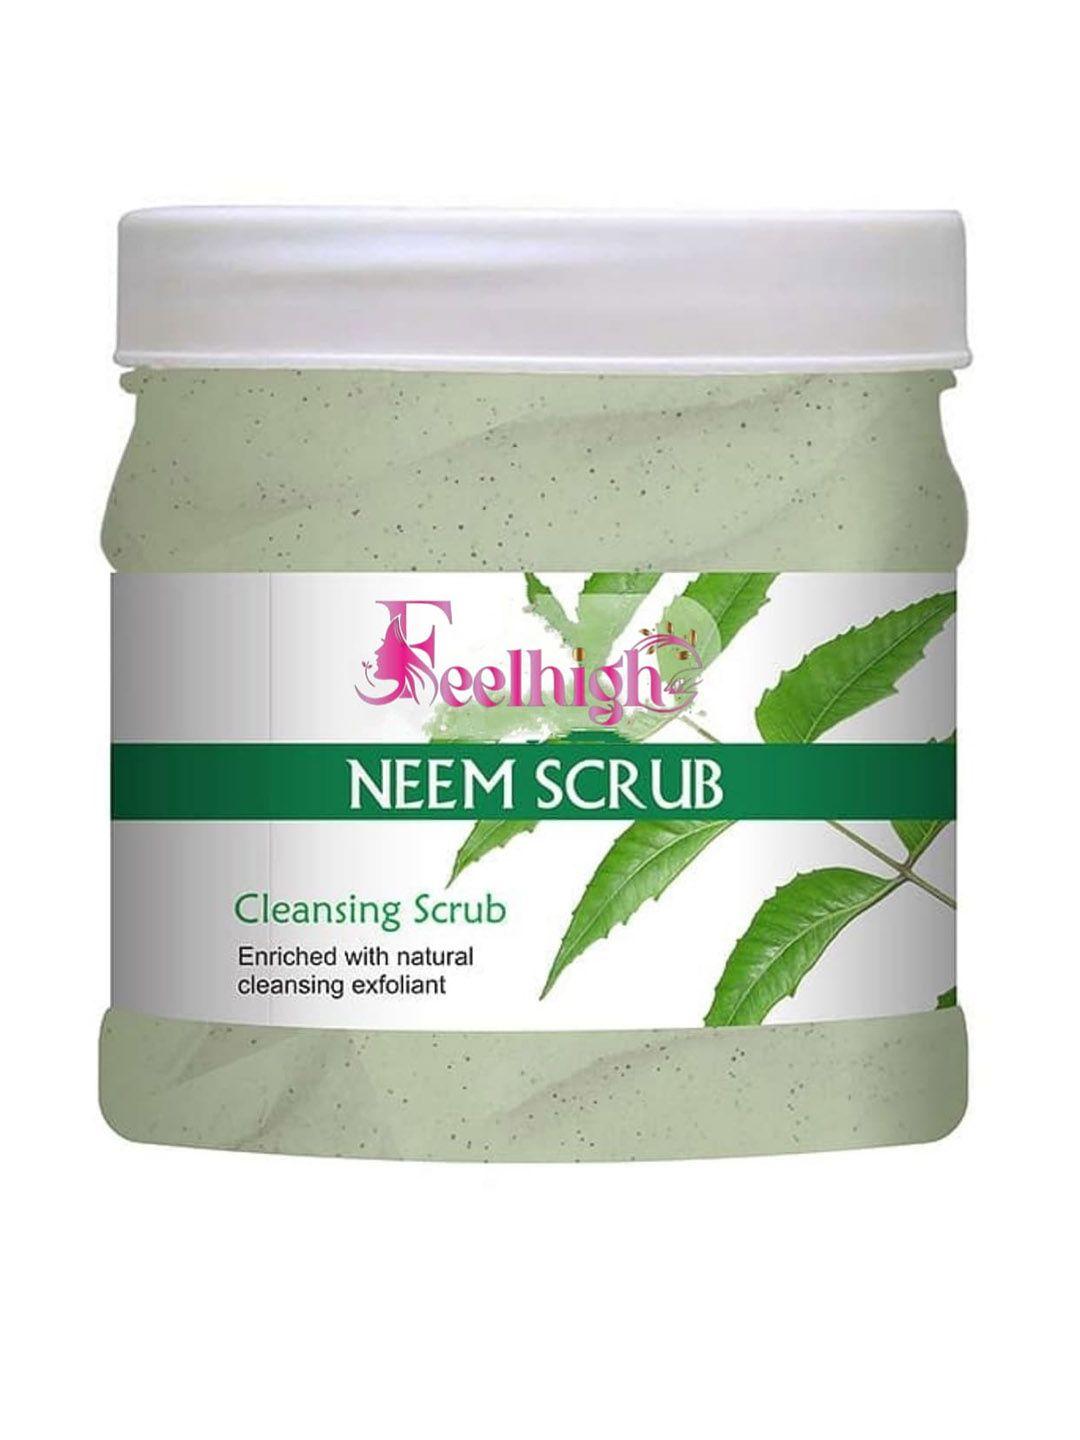 feelhigh neem facial cleansing scrub fades scar and acne spots - 500ml